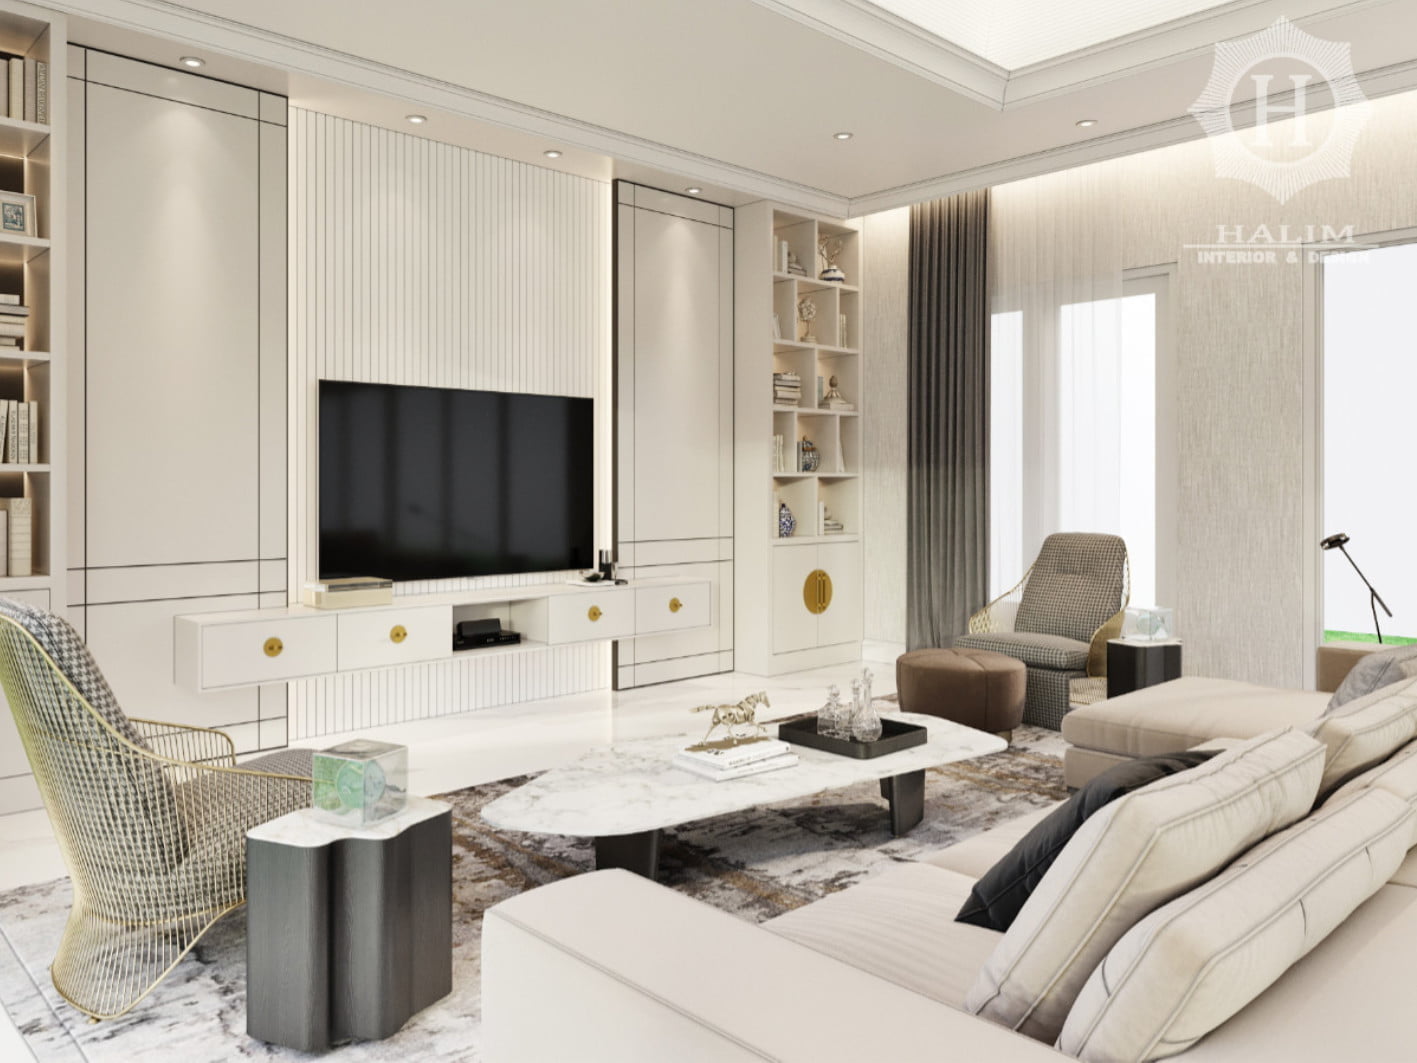 Halim Interior modern furniture contemporer american style minimalist european classic surabaya Thumb